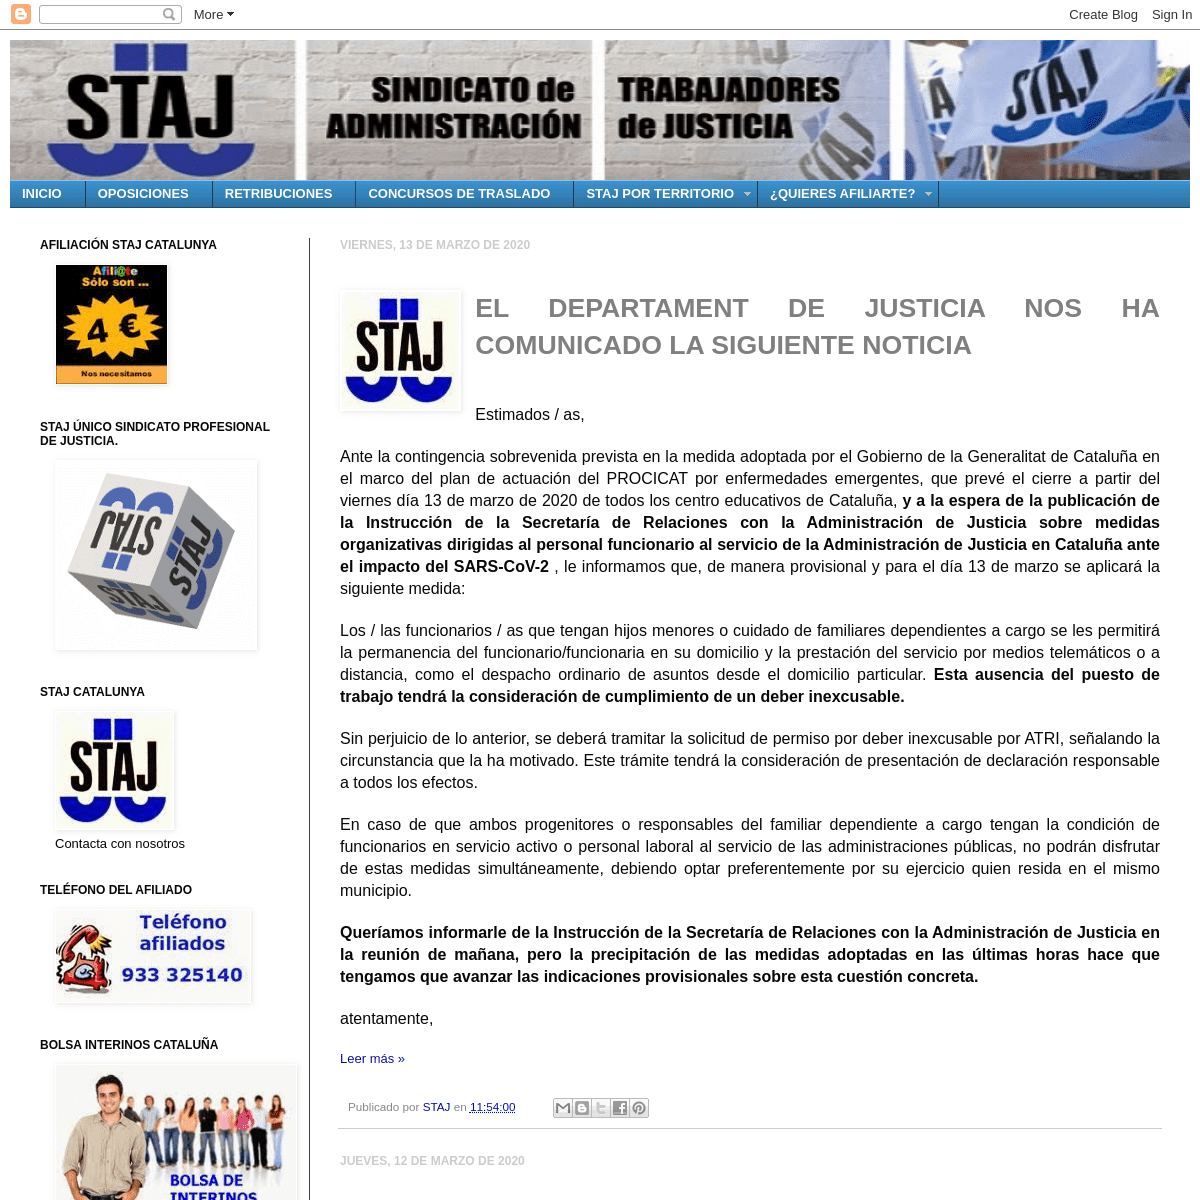 A complete backup of sindicato-staj.blogspot.com